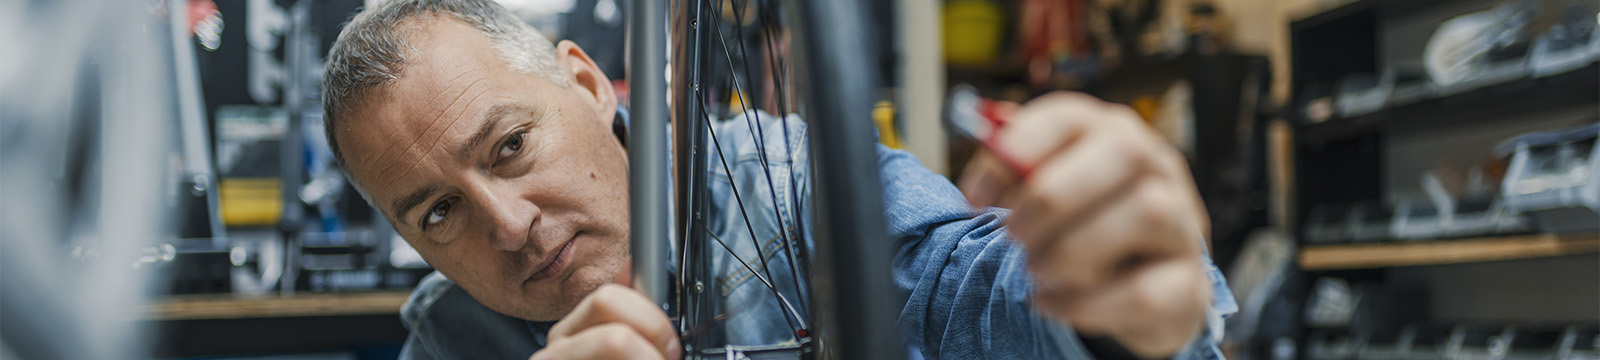 Bike store owner examining bike wheel